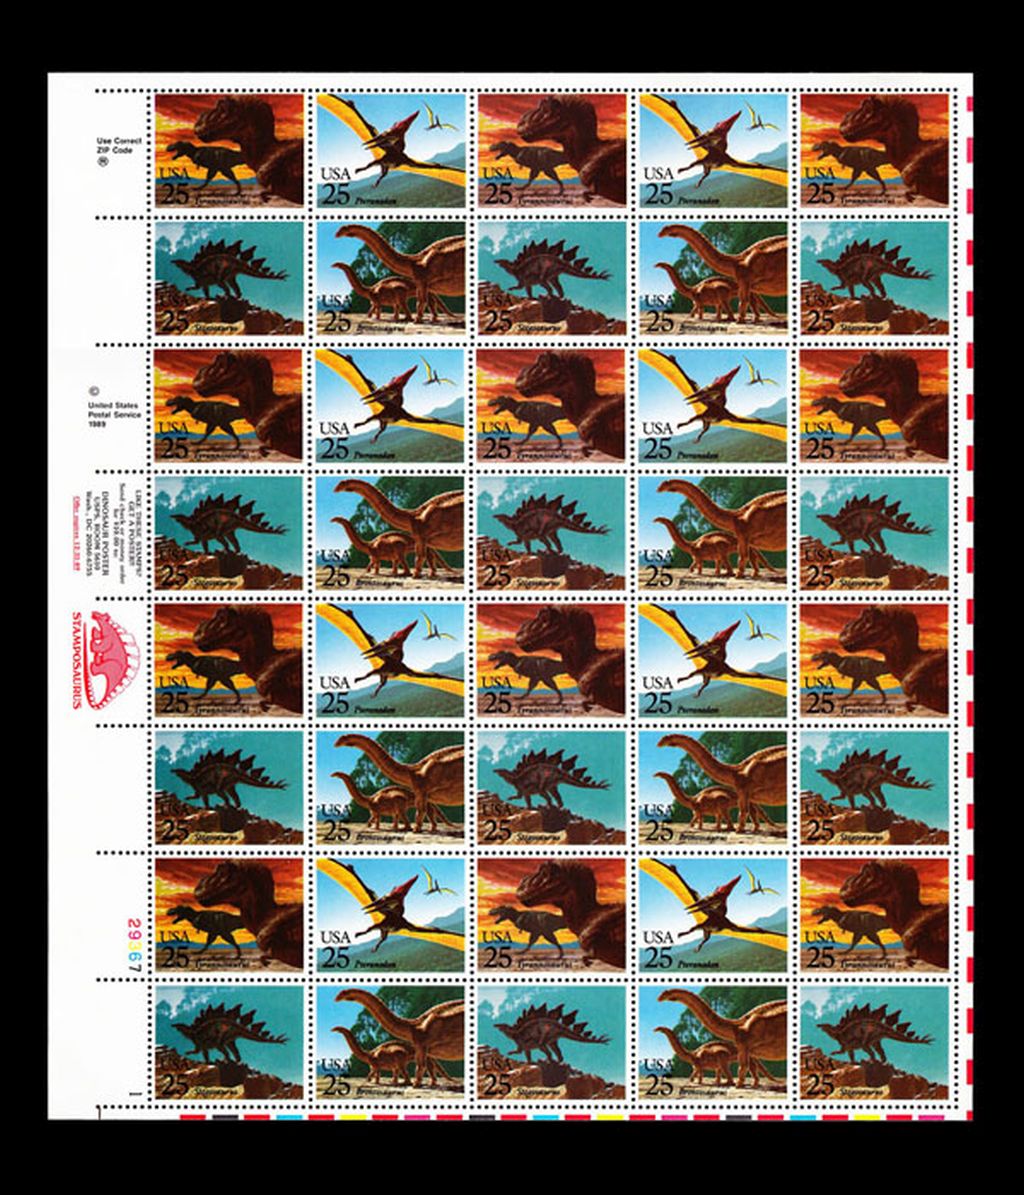  USA 1989 dinosaur stamps